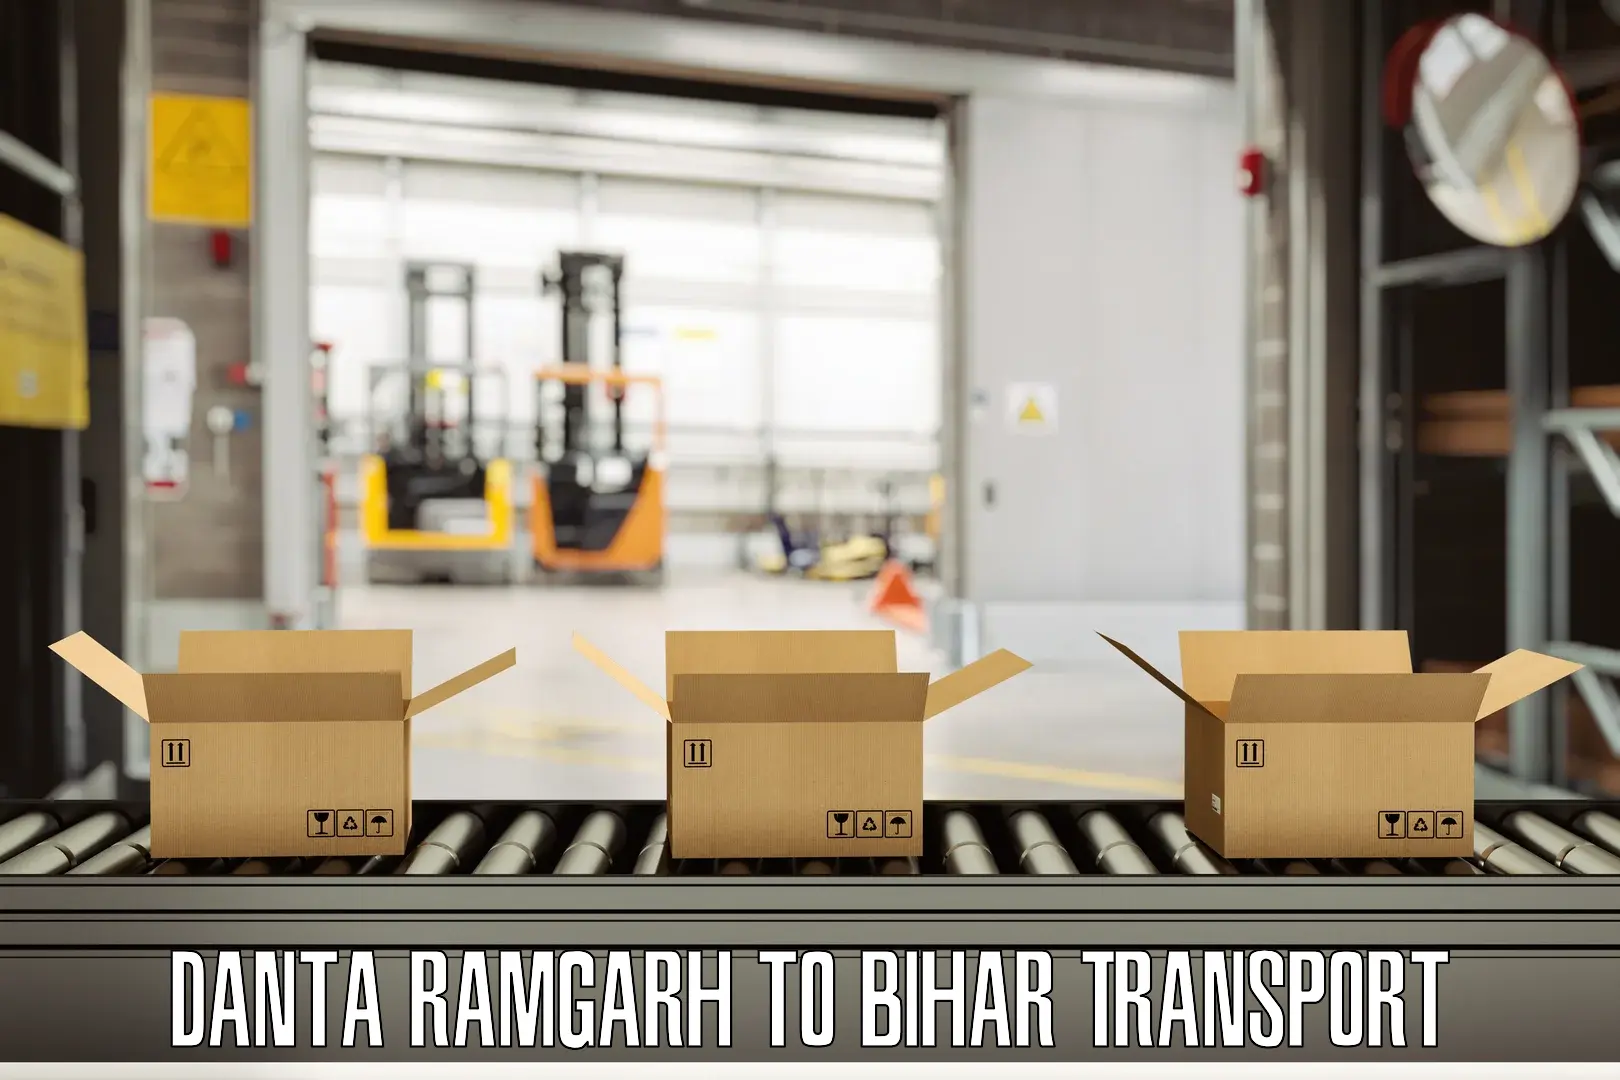 Sending bike to another city Danta Ramgarh to Bihar